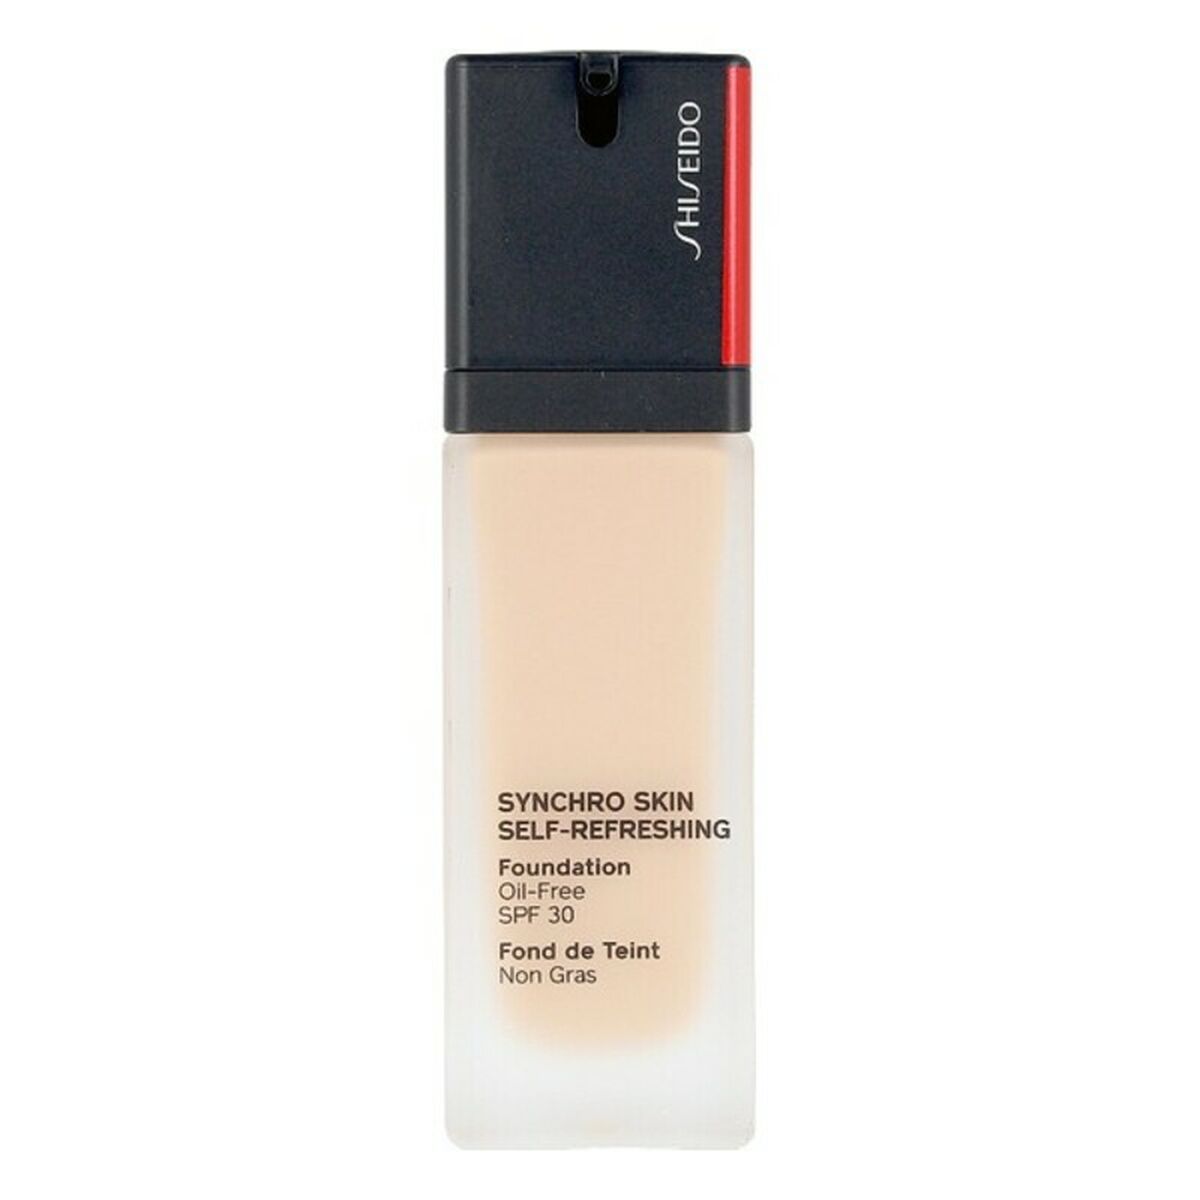 Flüssigkeitsbild -Basissynchronis -Skin Shiseido (30 ml)